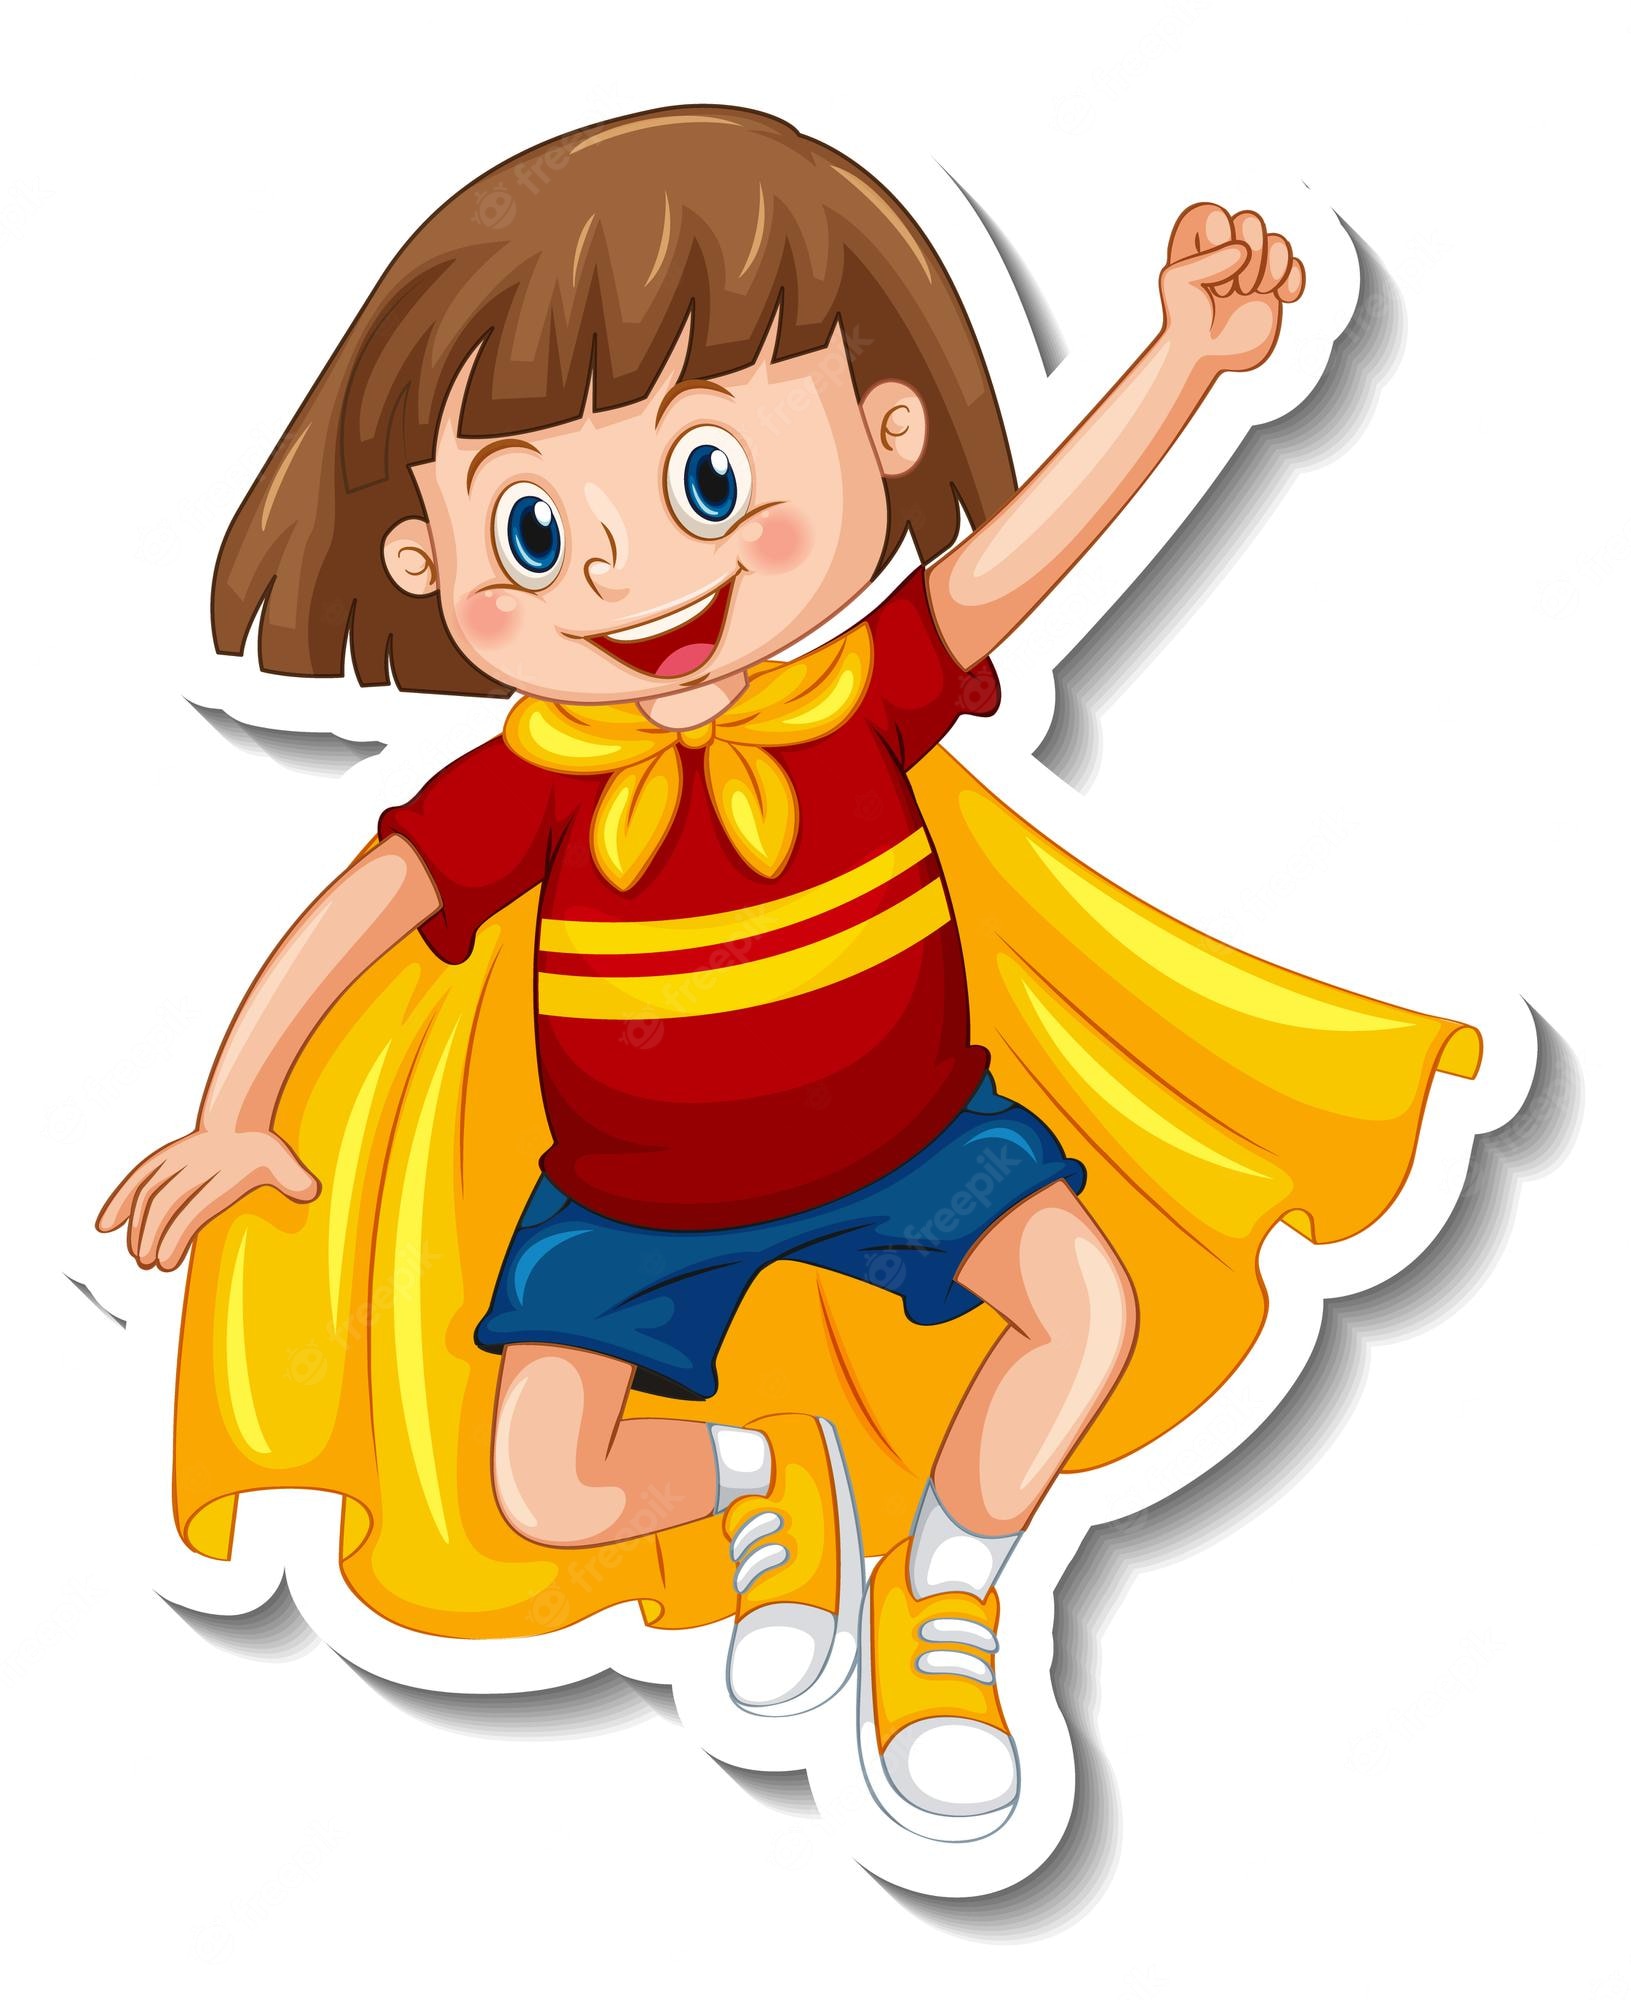 Superhero Clipart, Boys Super hero Clip art, Girls Super Hero Clipart ...